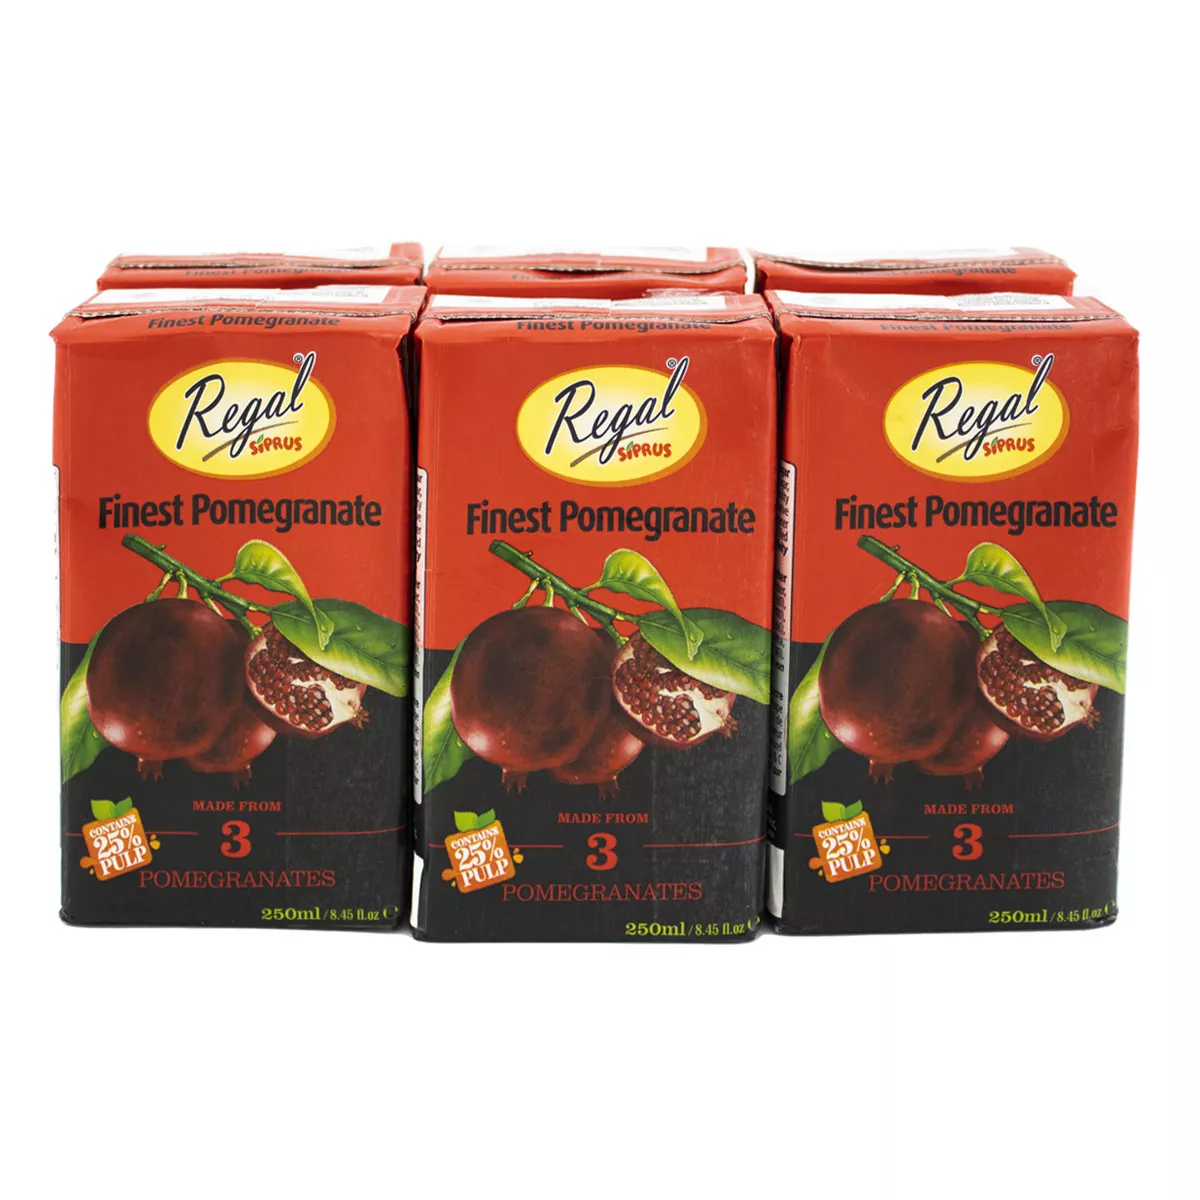 http://atiyasfreshfarm.com/public/storage/photos/1/New product/Regal Pomegranate Juice 250ml 6pks.png